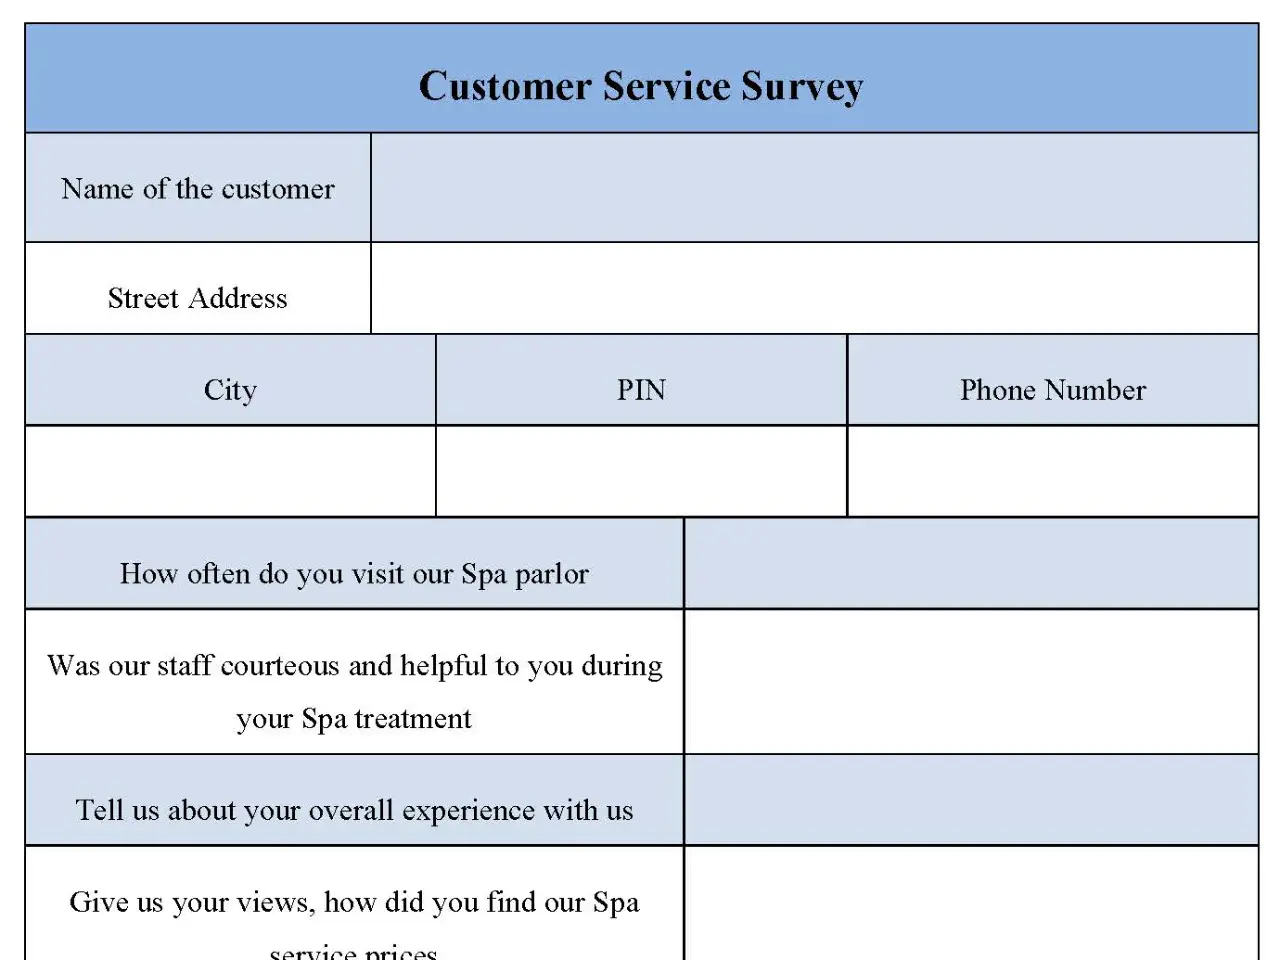 Customer service survey form